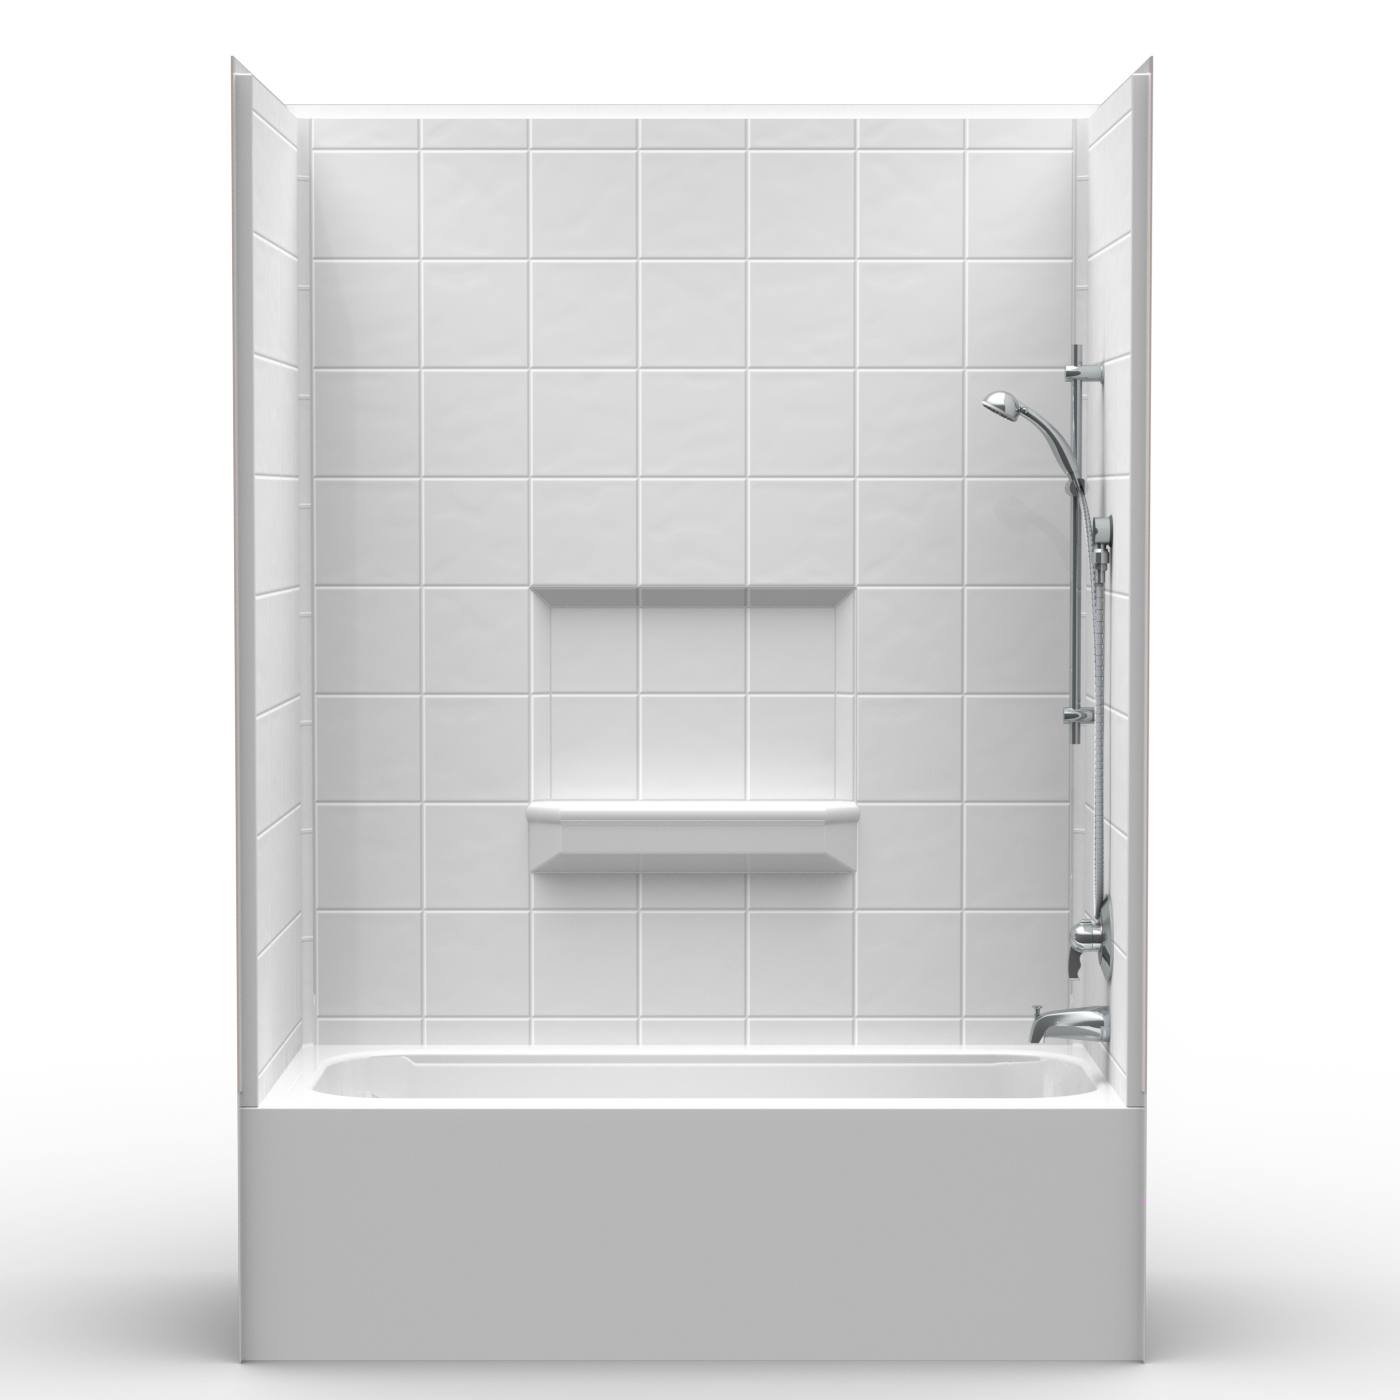 60 X 30 85 Tub Shower Combo, Built In Bathtub Shower